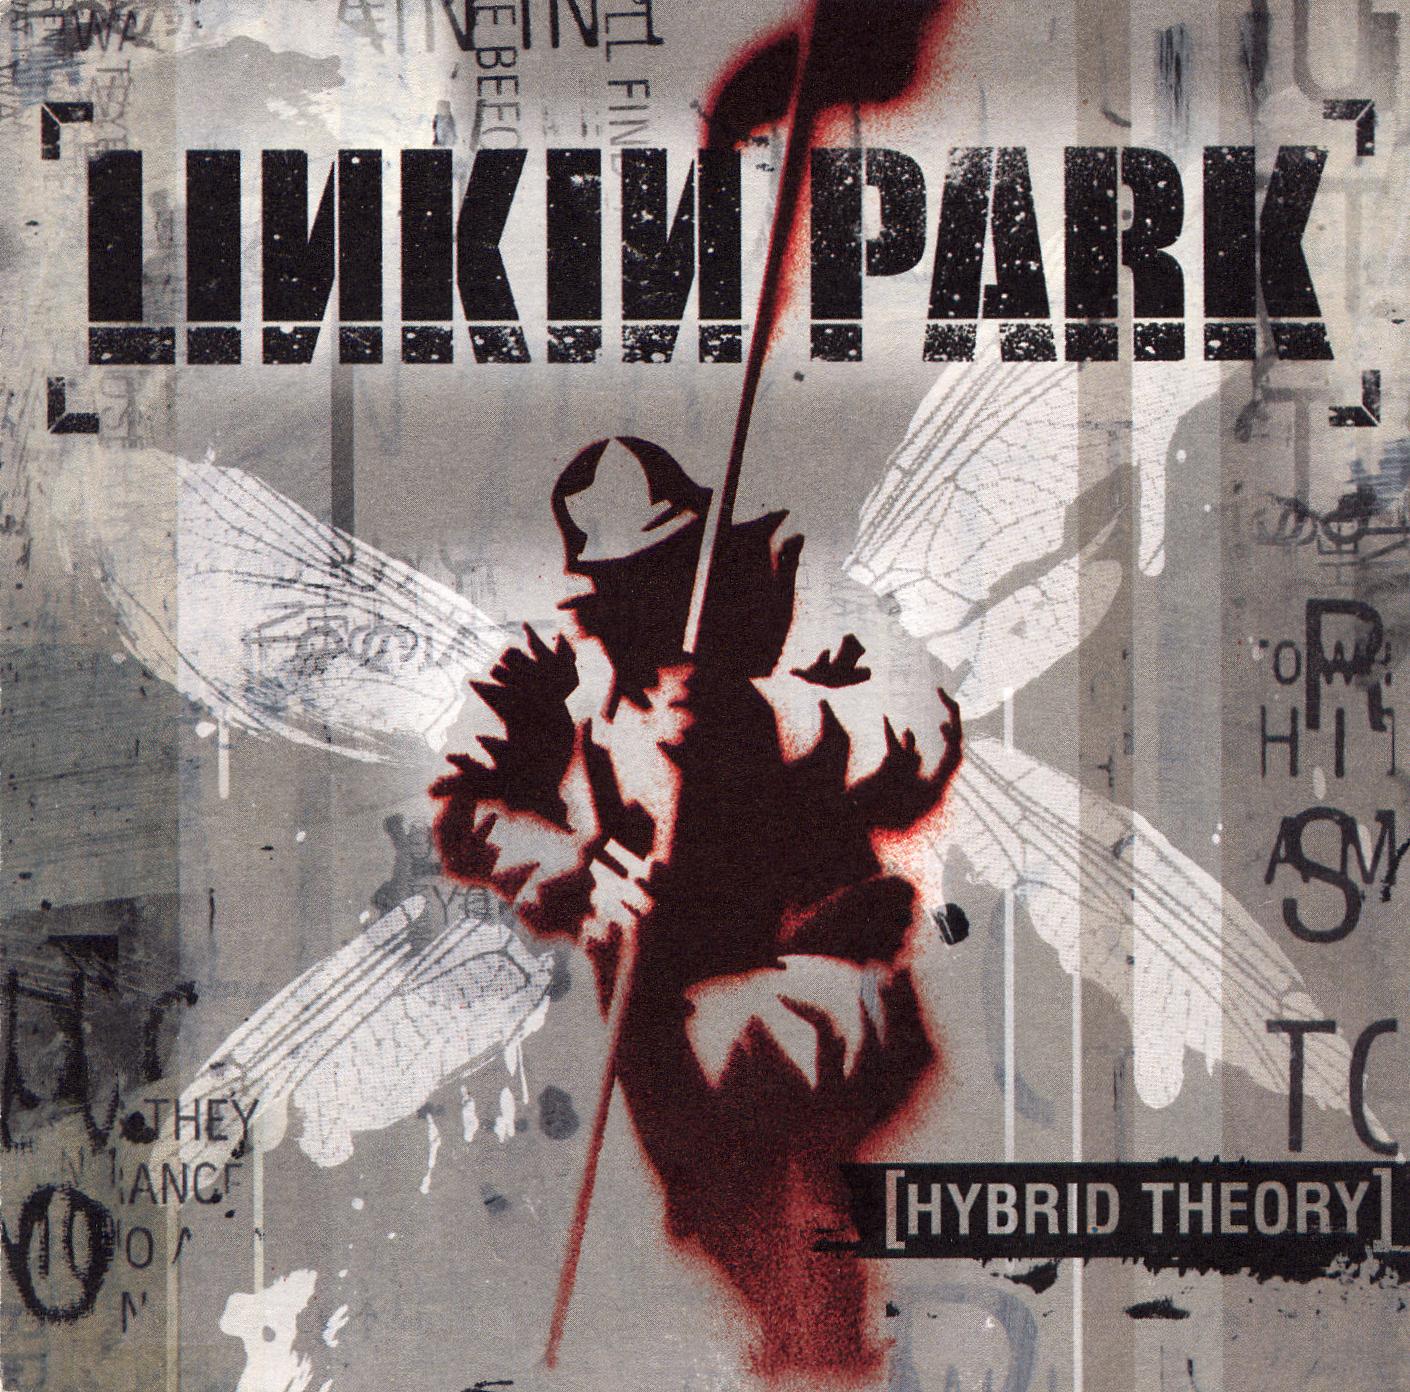 Vol 2, Track 4: ”Hybrid Theory” by Linkin Park